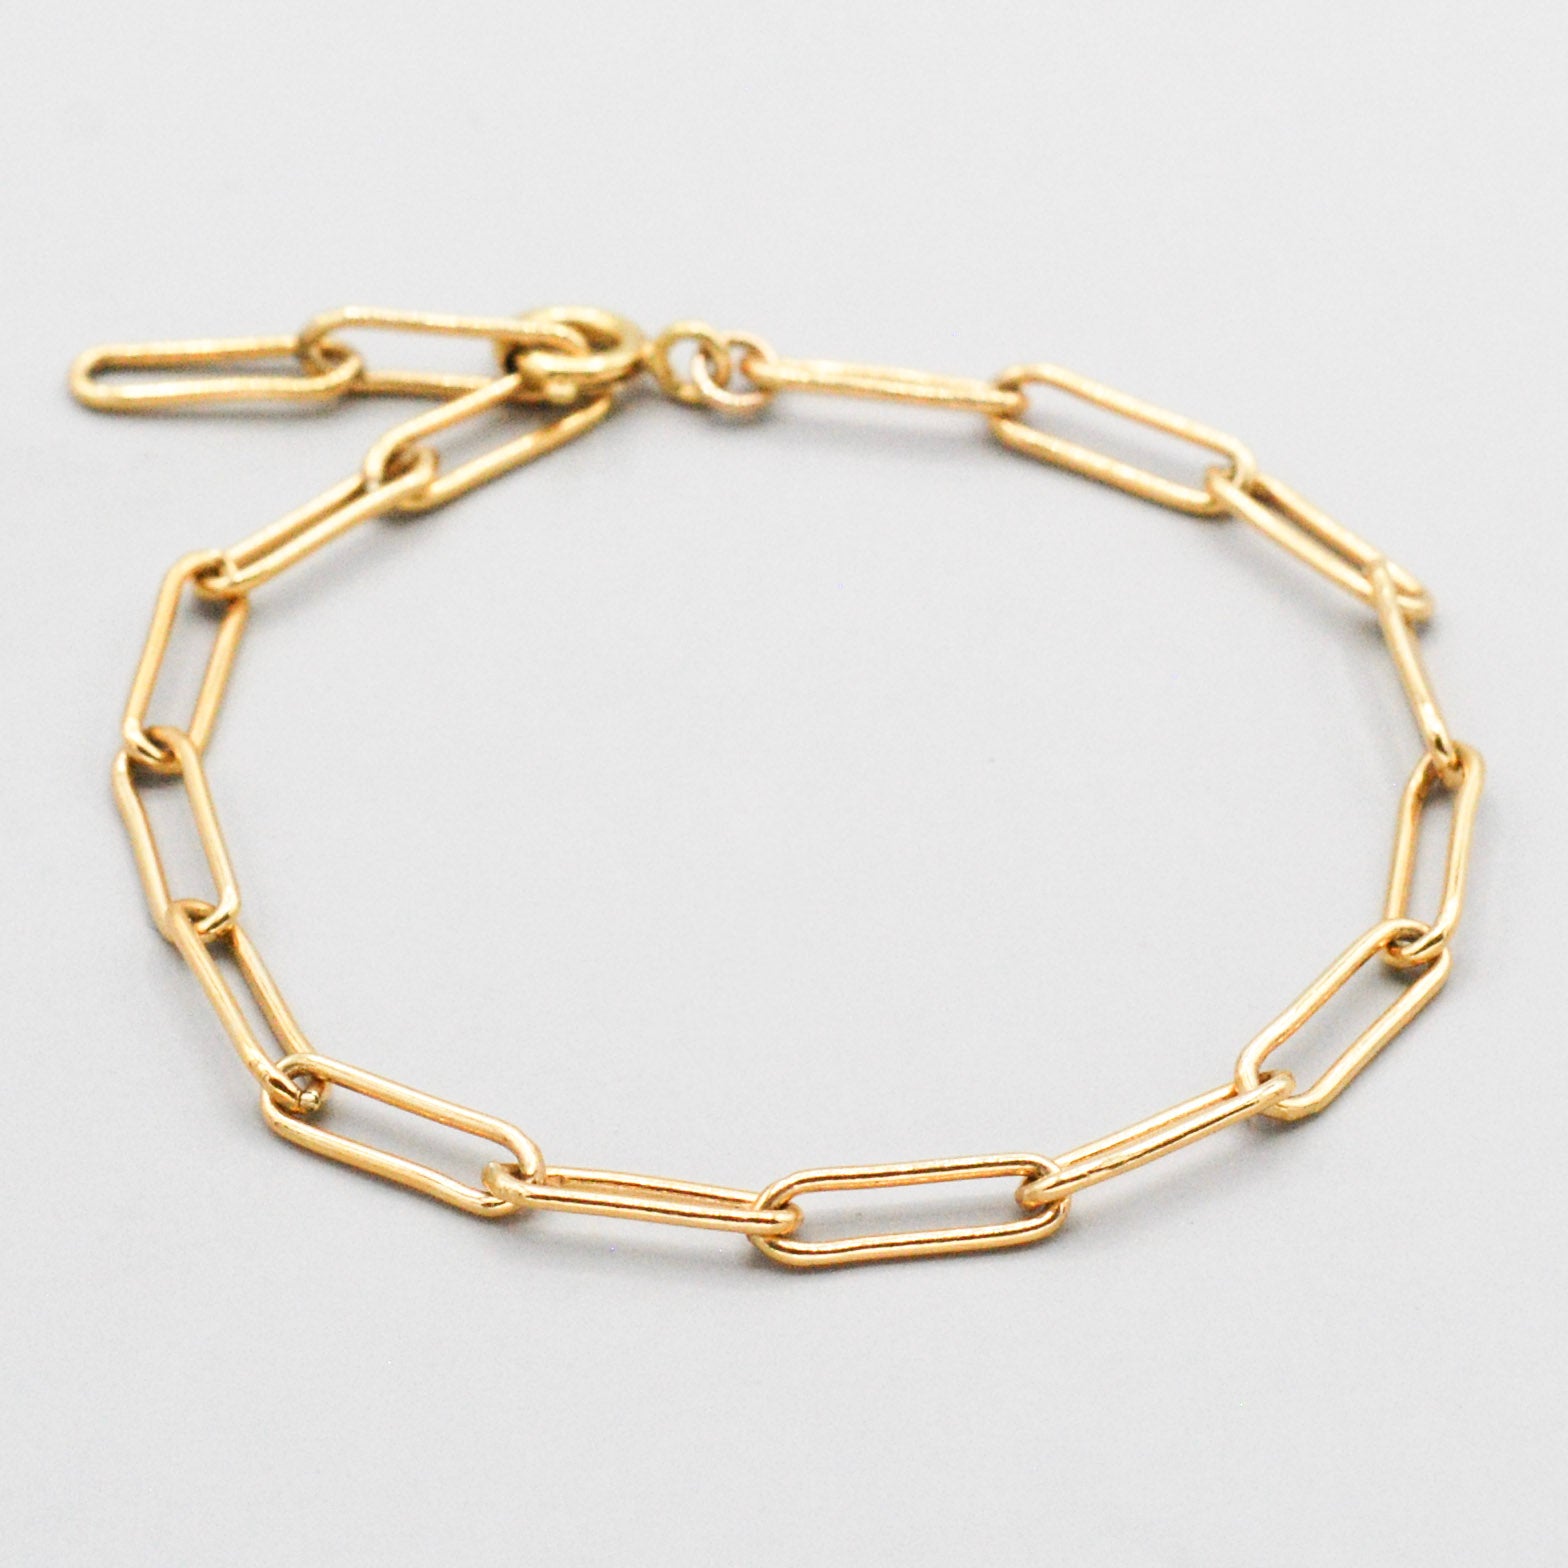 Paperlink Chain Bracelet